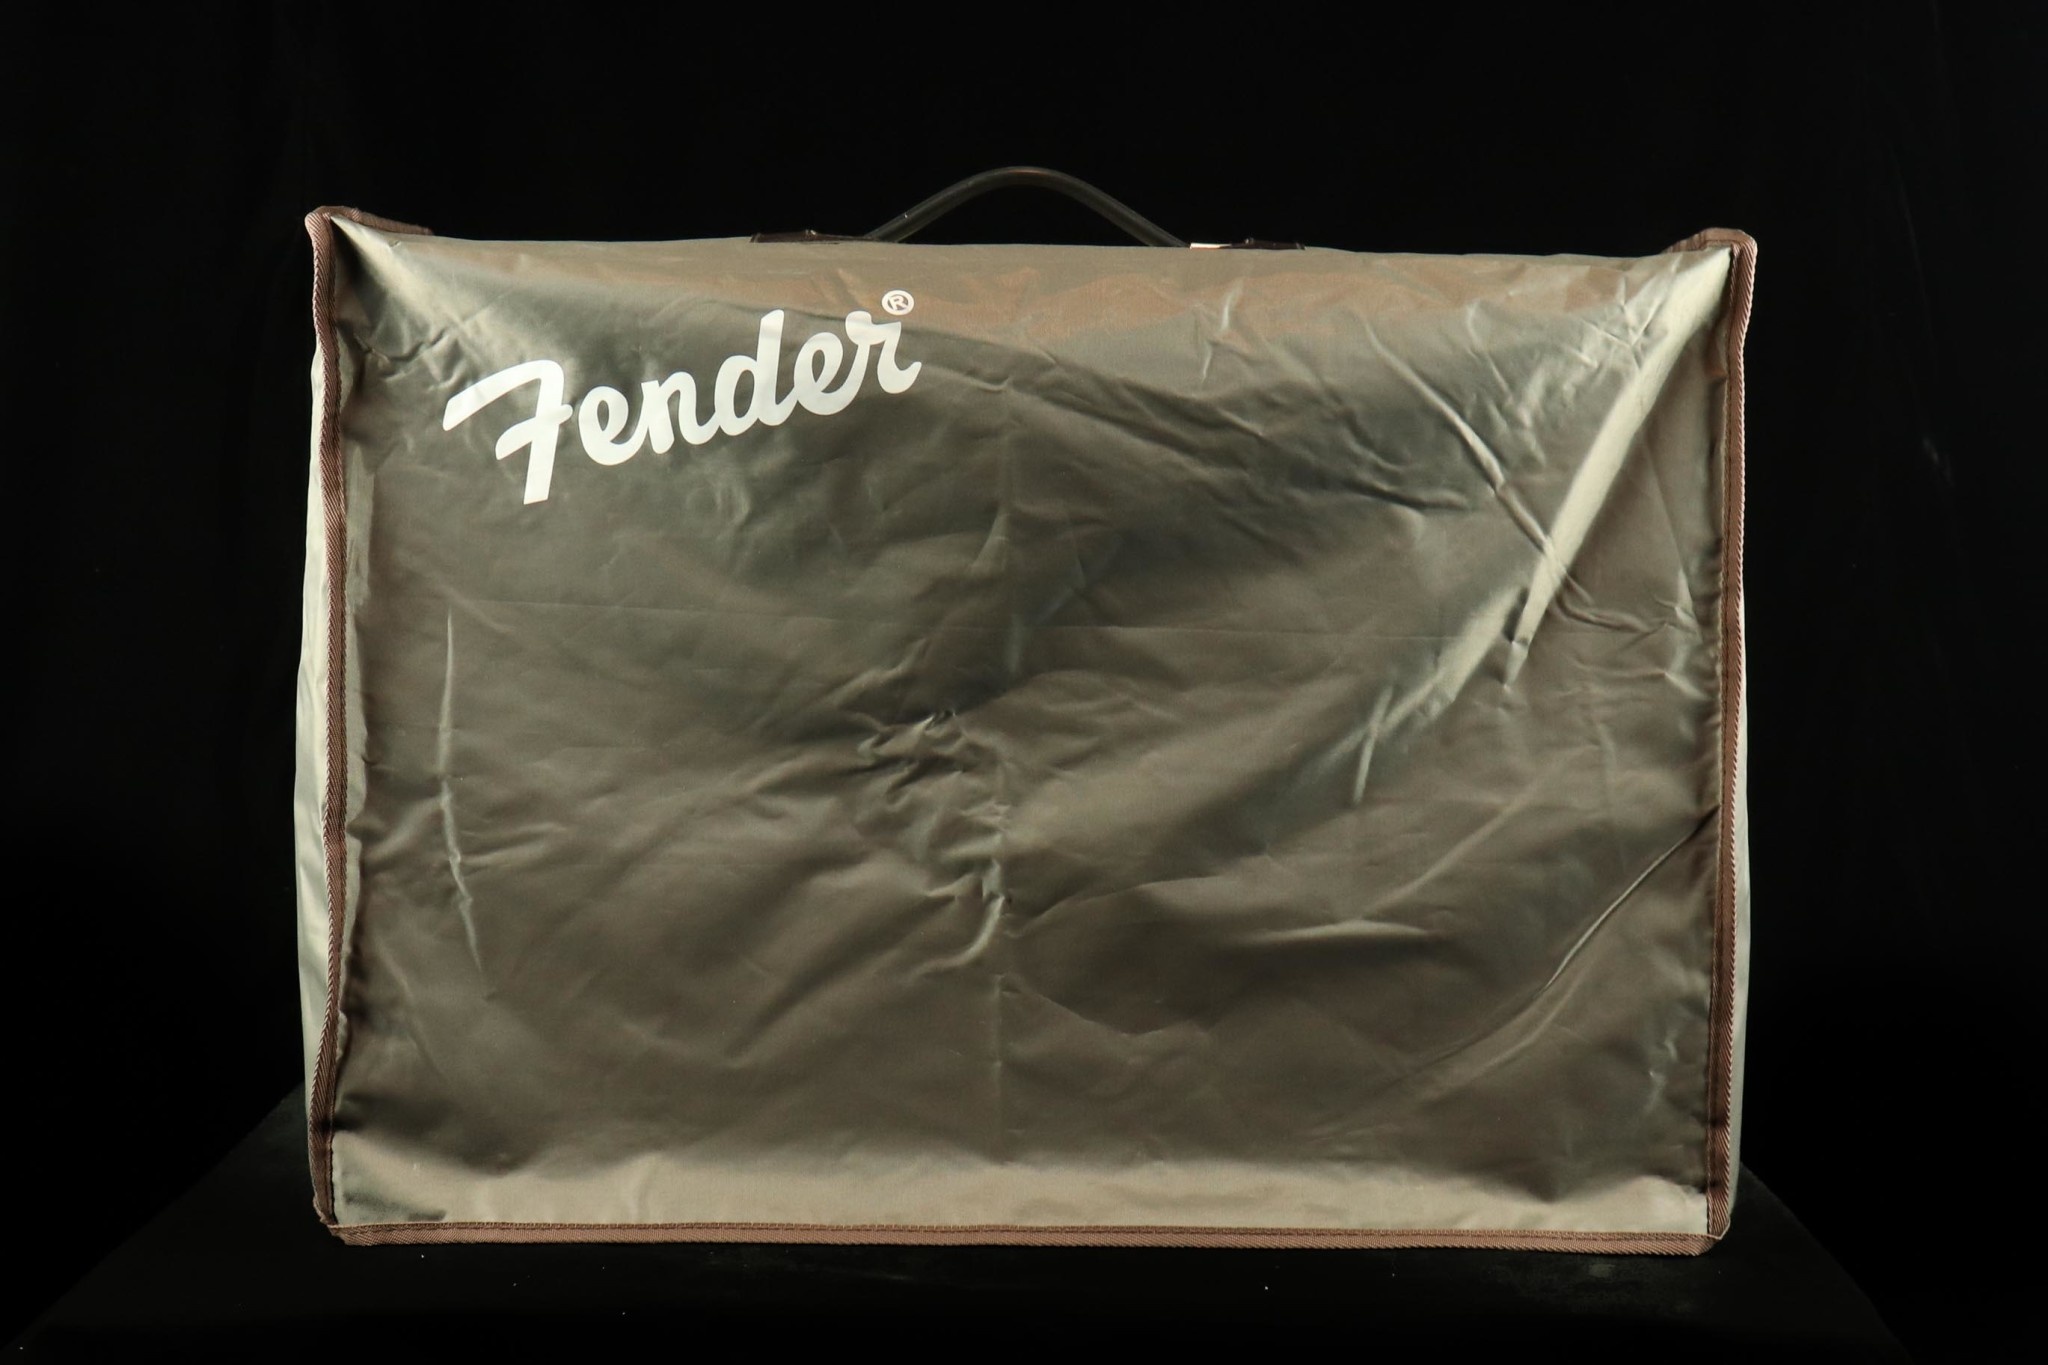 Fender Fender 65' Deluxe Reverb Reissue Limited Edition - Blonde